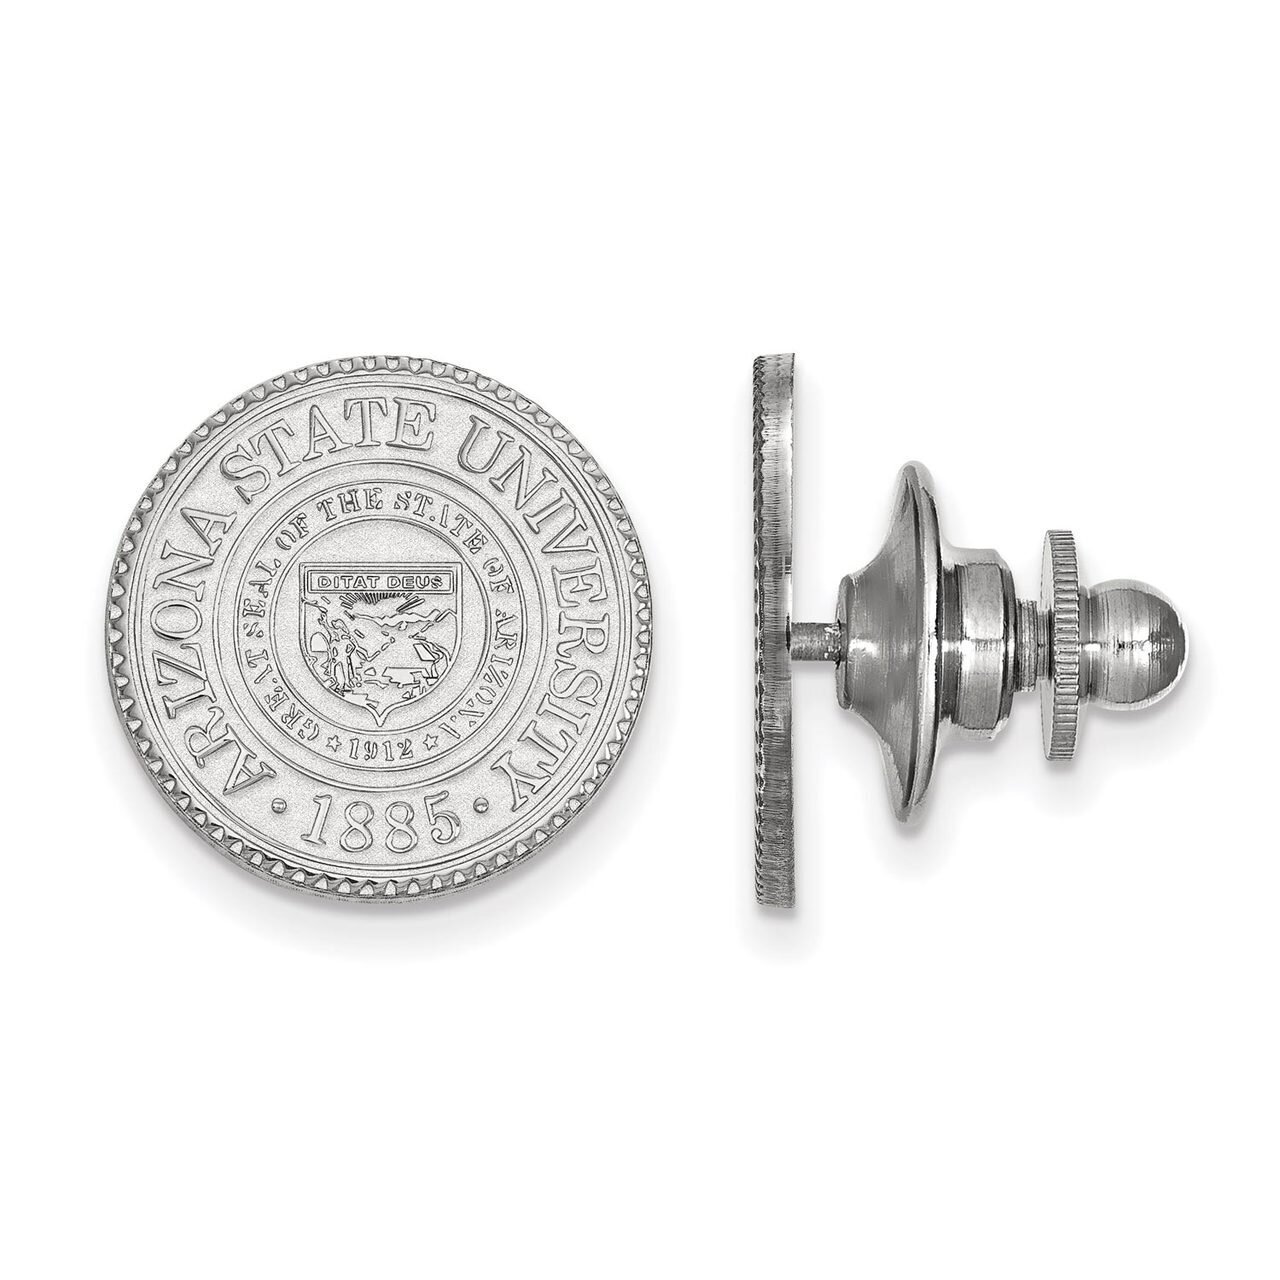 Arizona State University Crest Lapel Pin Sterling Silver SS045AZS